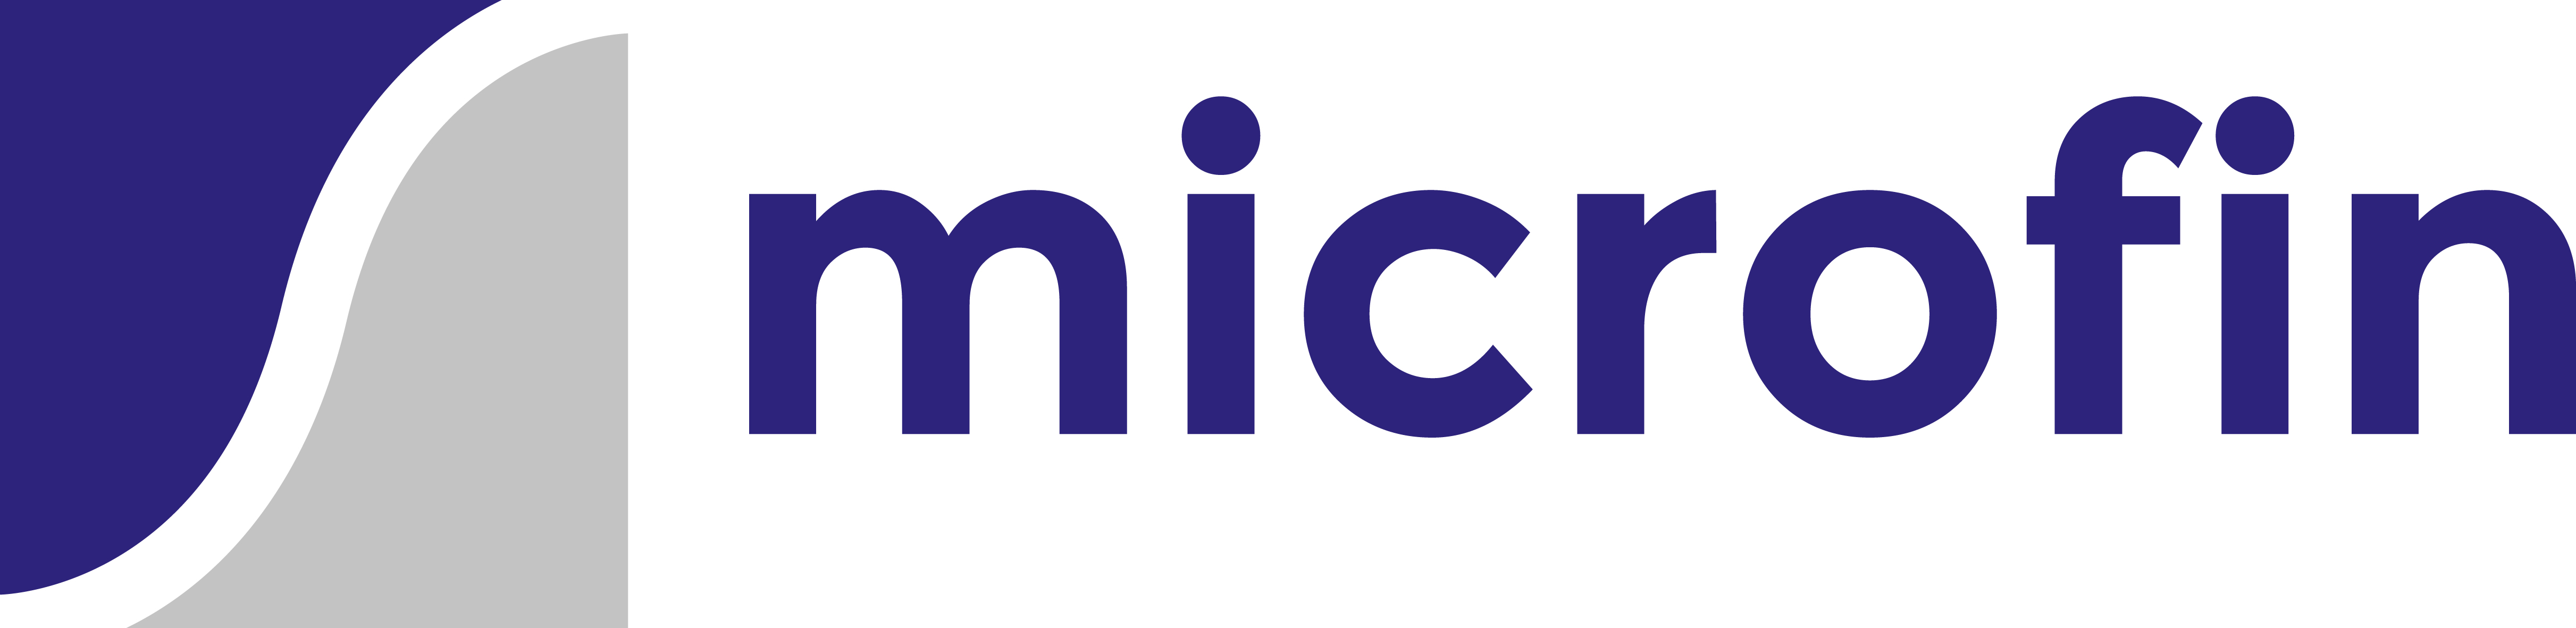 microfin logo 08115 4845x1181